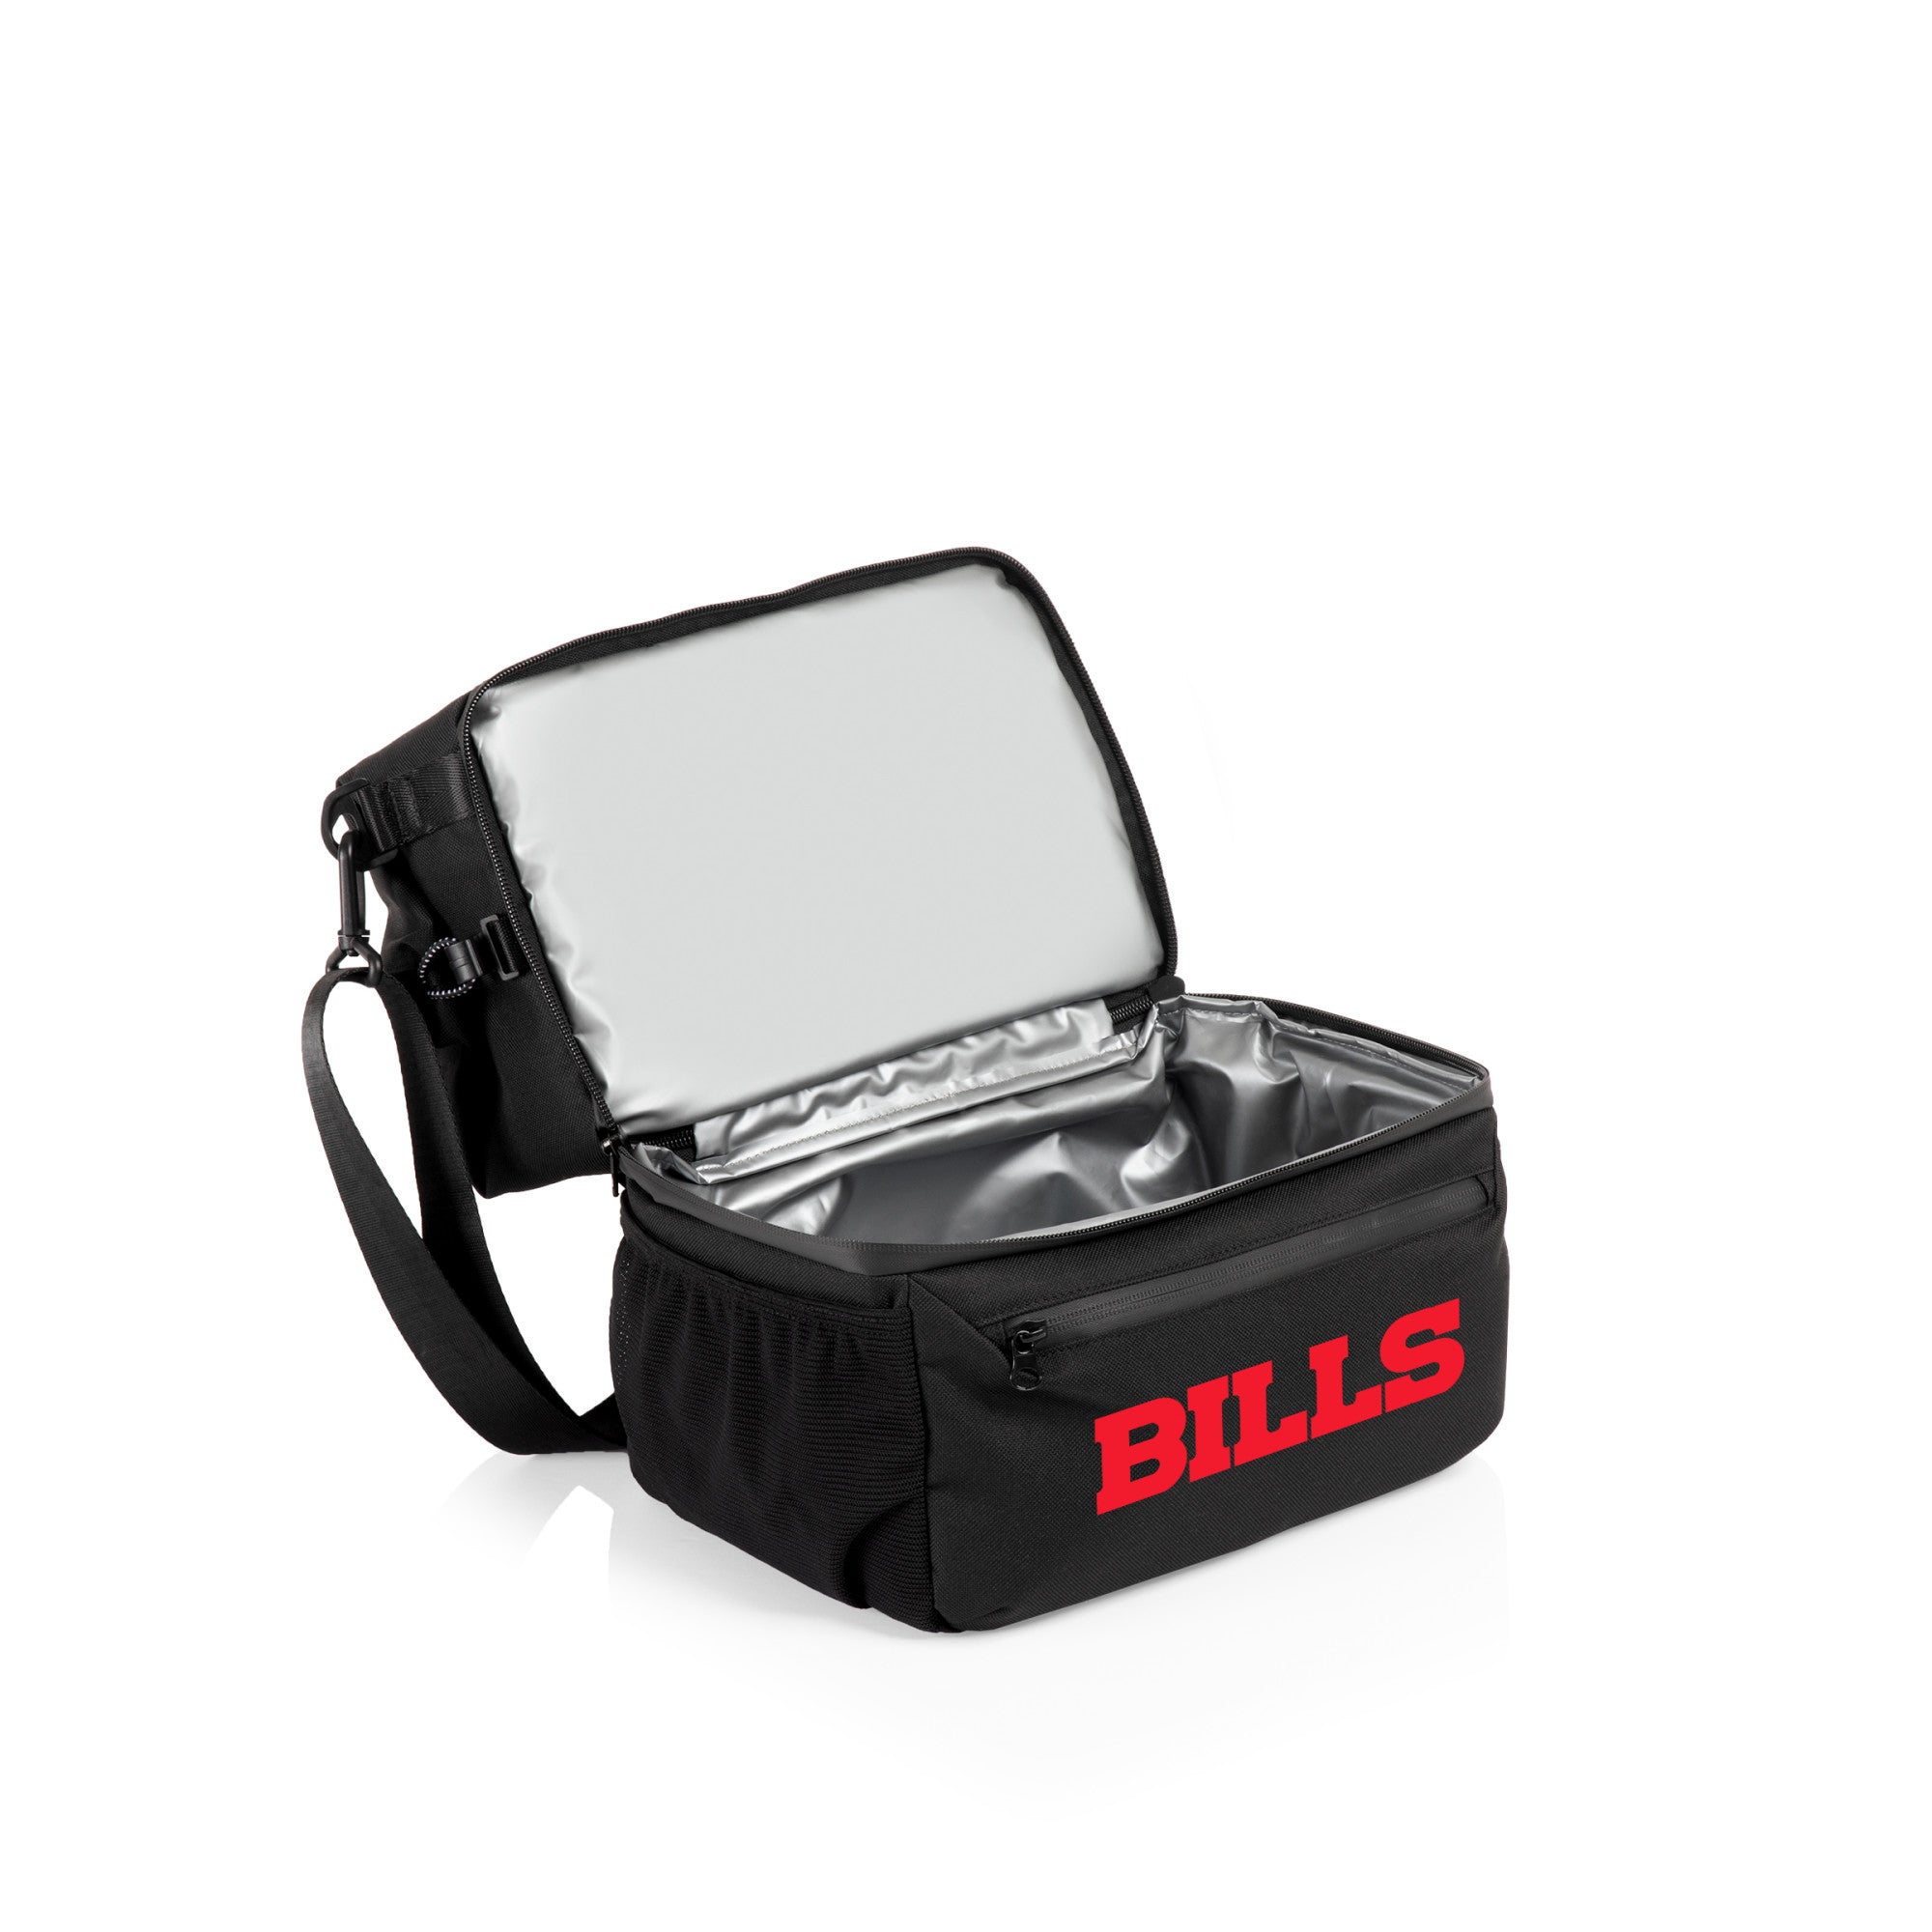 Buffalo Bills - Tarana Lunch Bag Cooler with Utensils